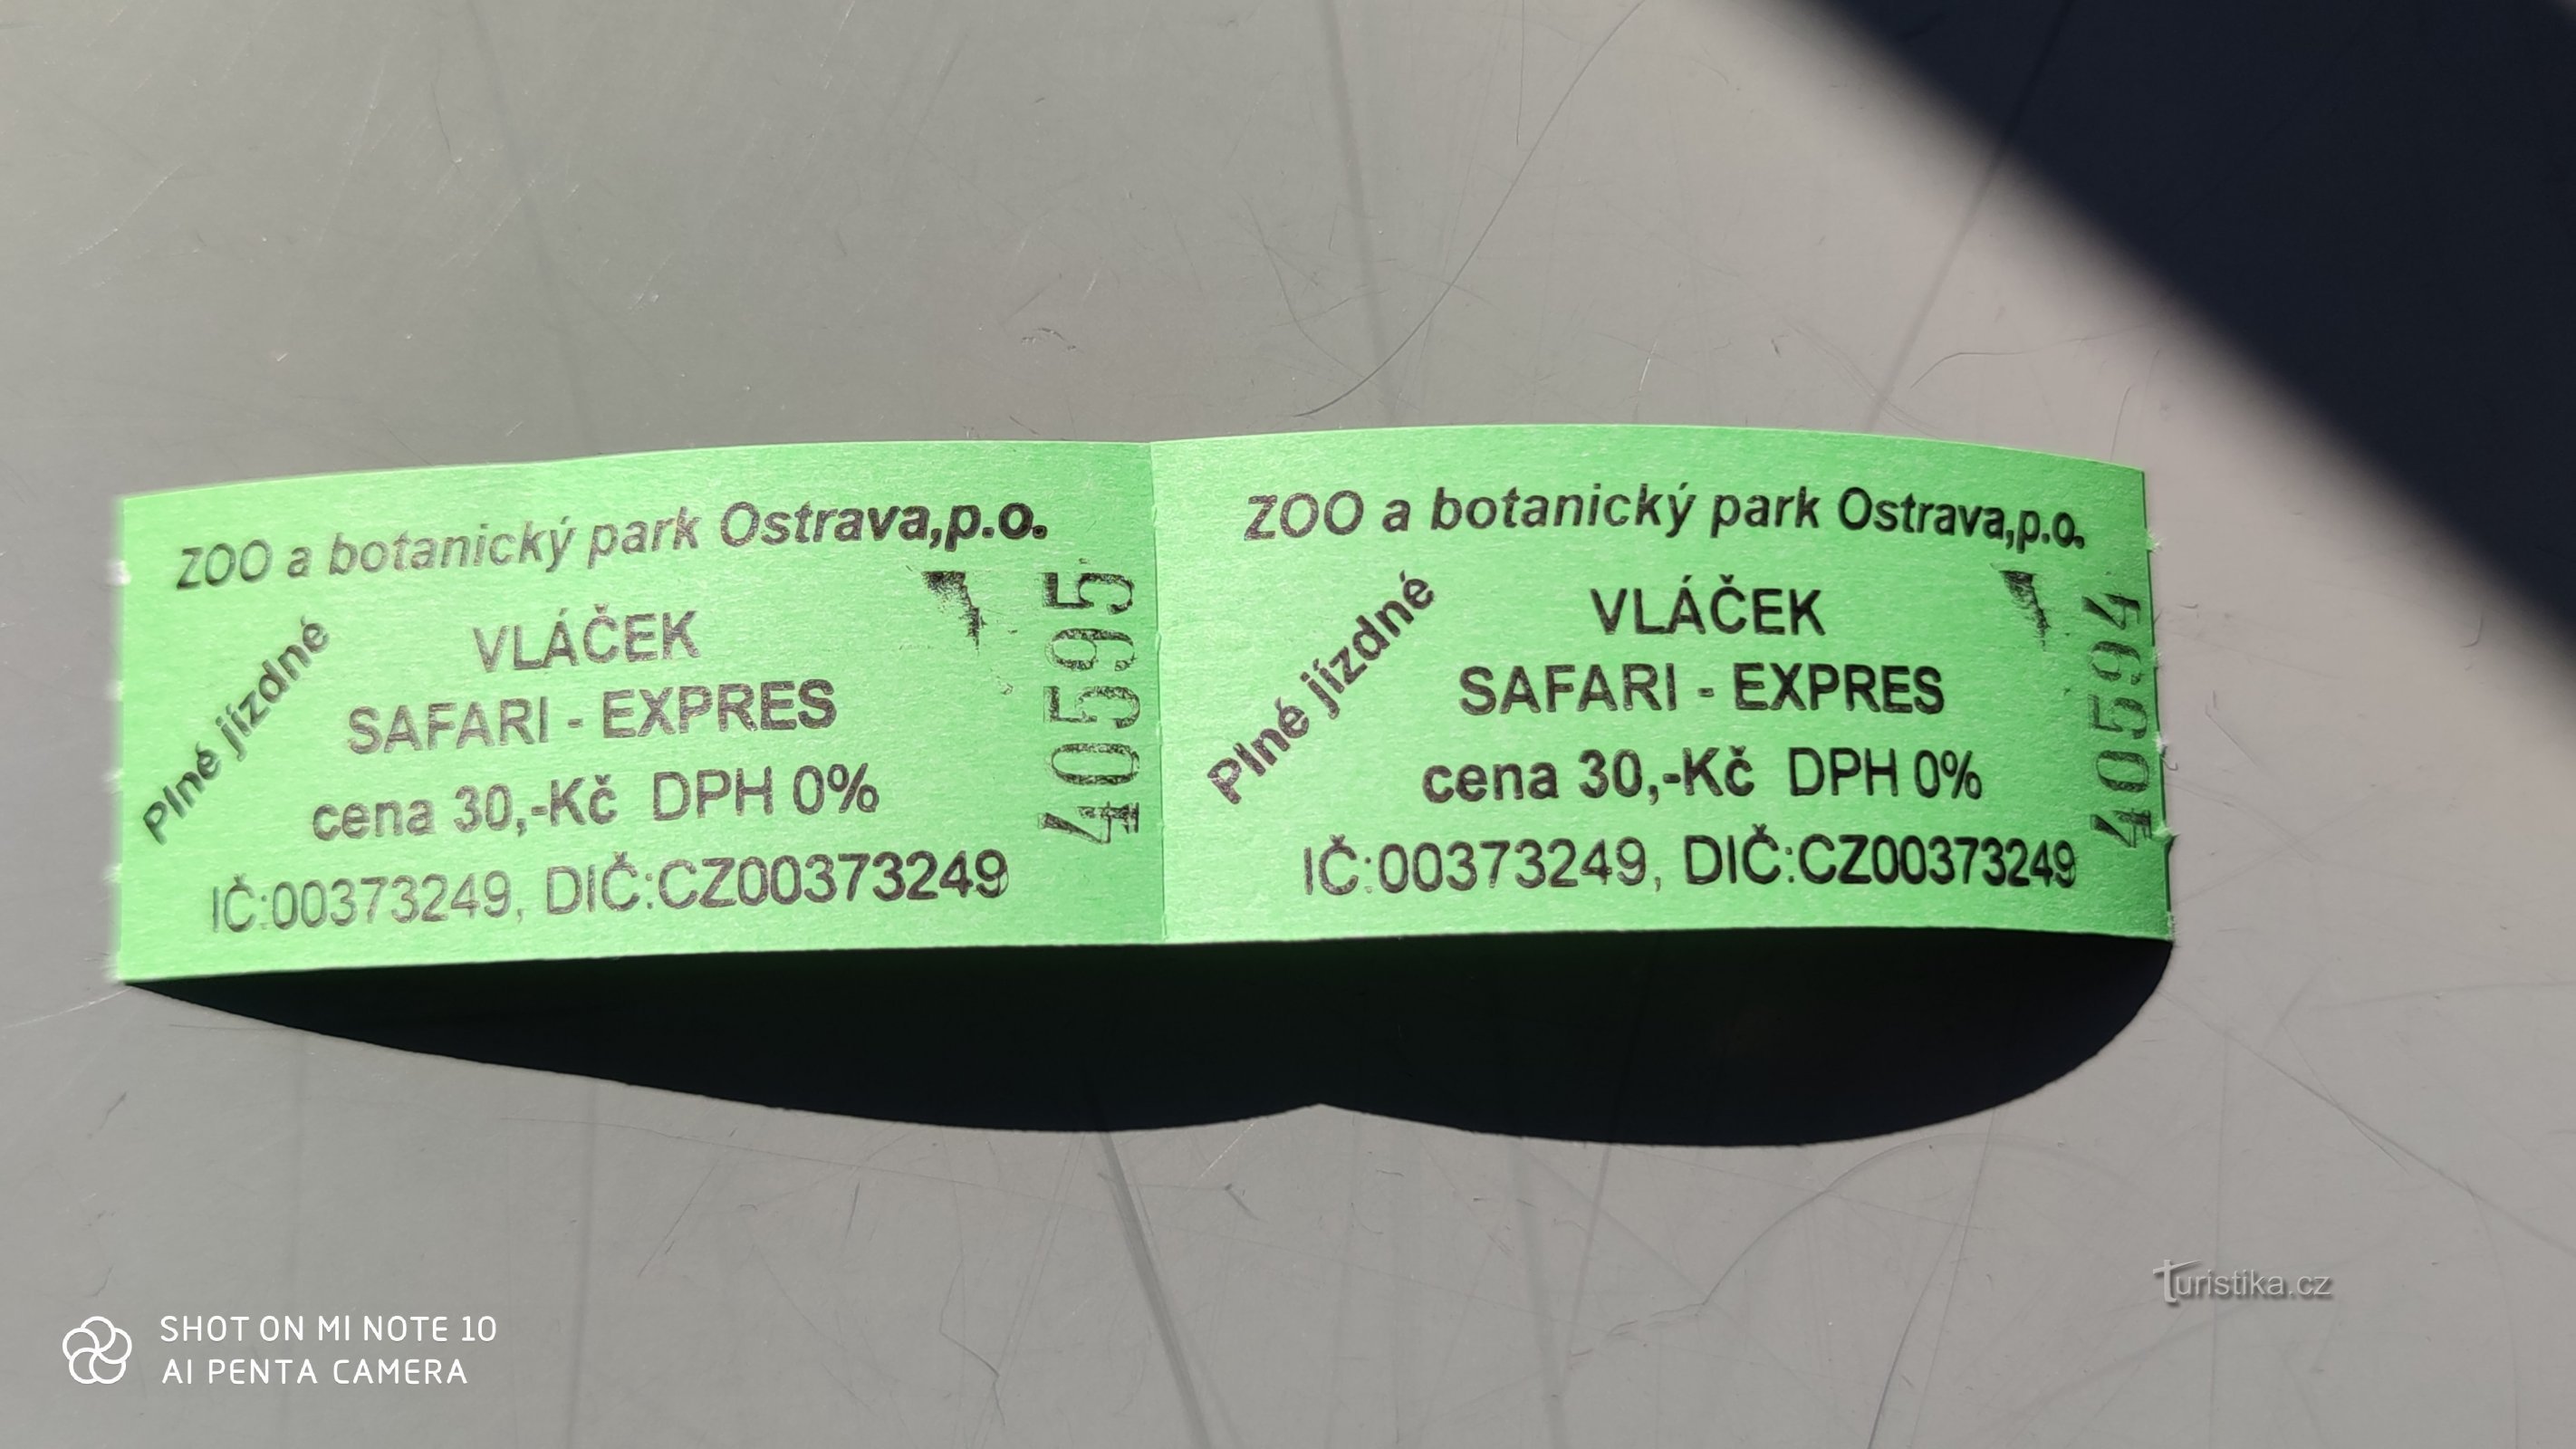 Safari express w zoo w Ostrawie